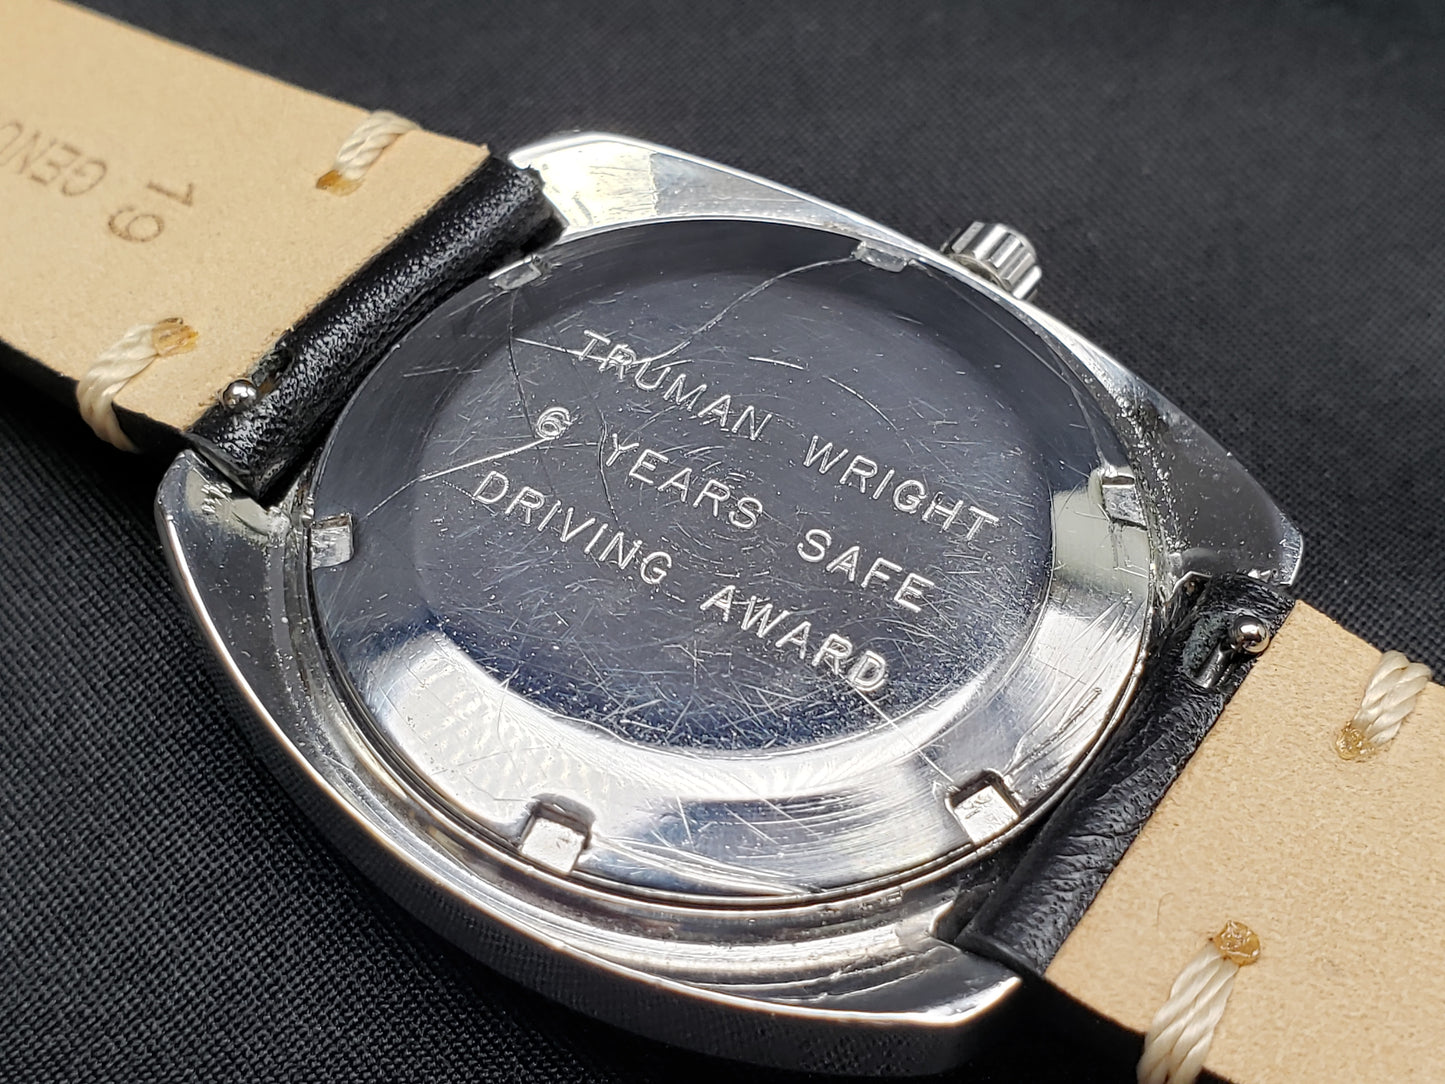 1973 Hamilton Auto Date Buccaneer Award Watch